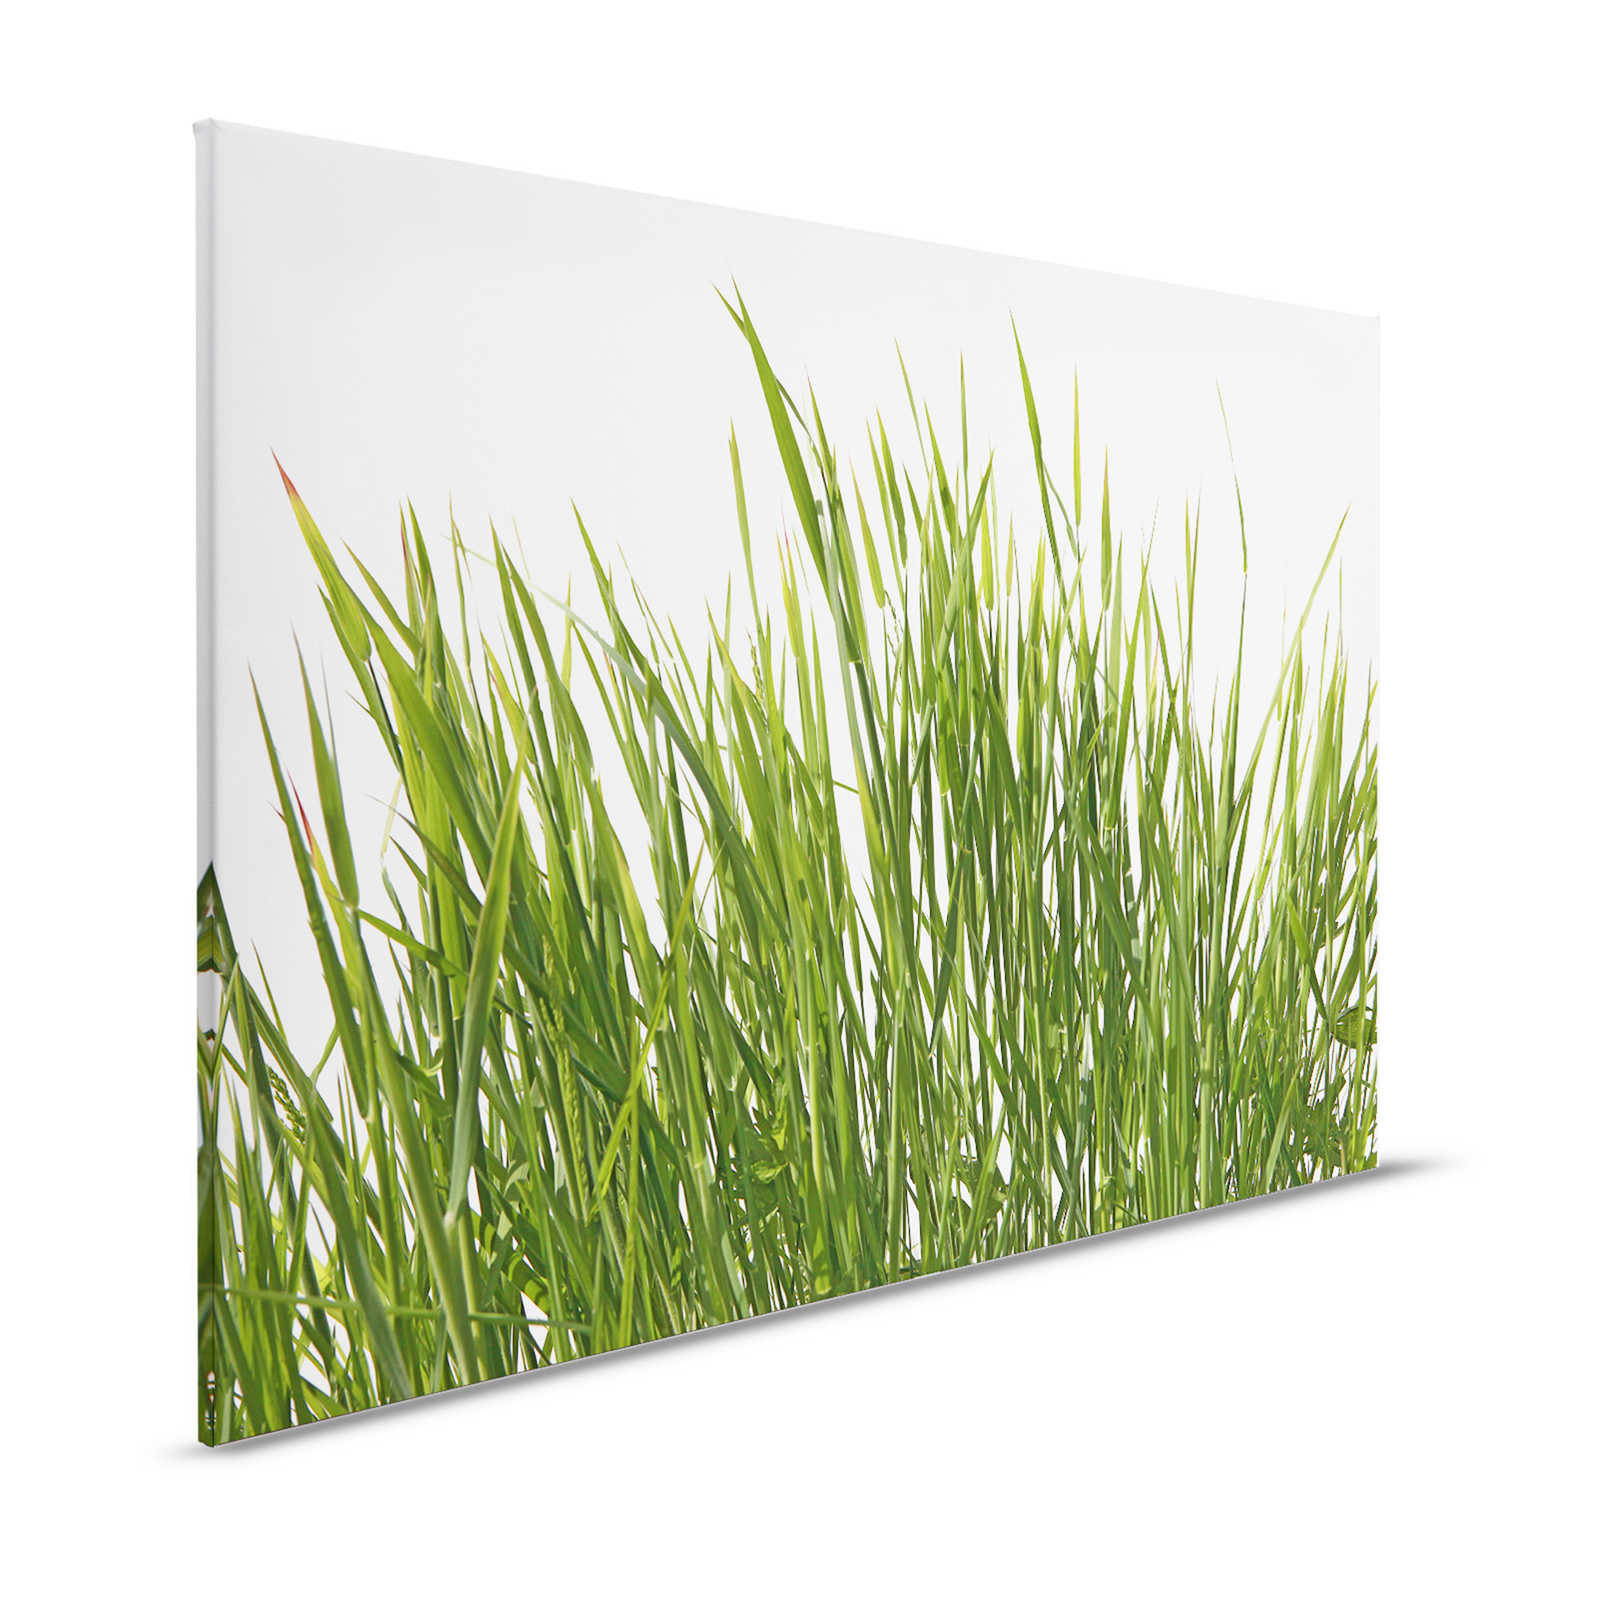 Cuadro Detalle hierbas con fondo blanco - 1,20 m x 0,80 m
